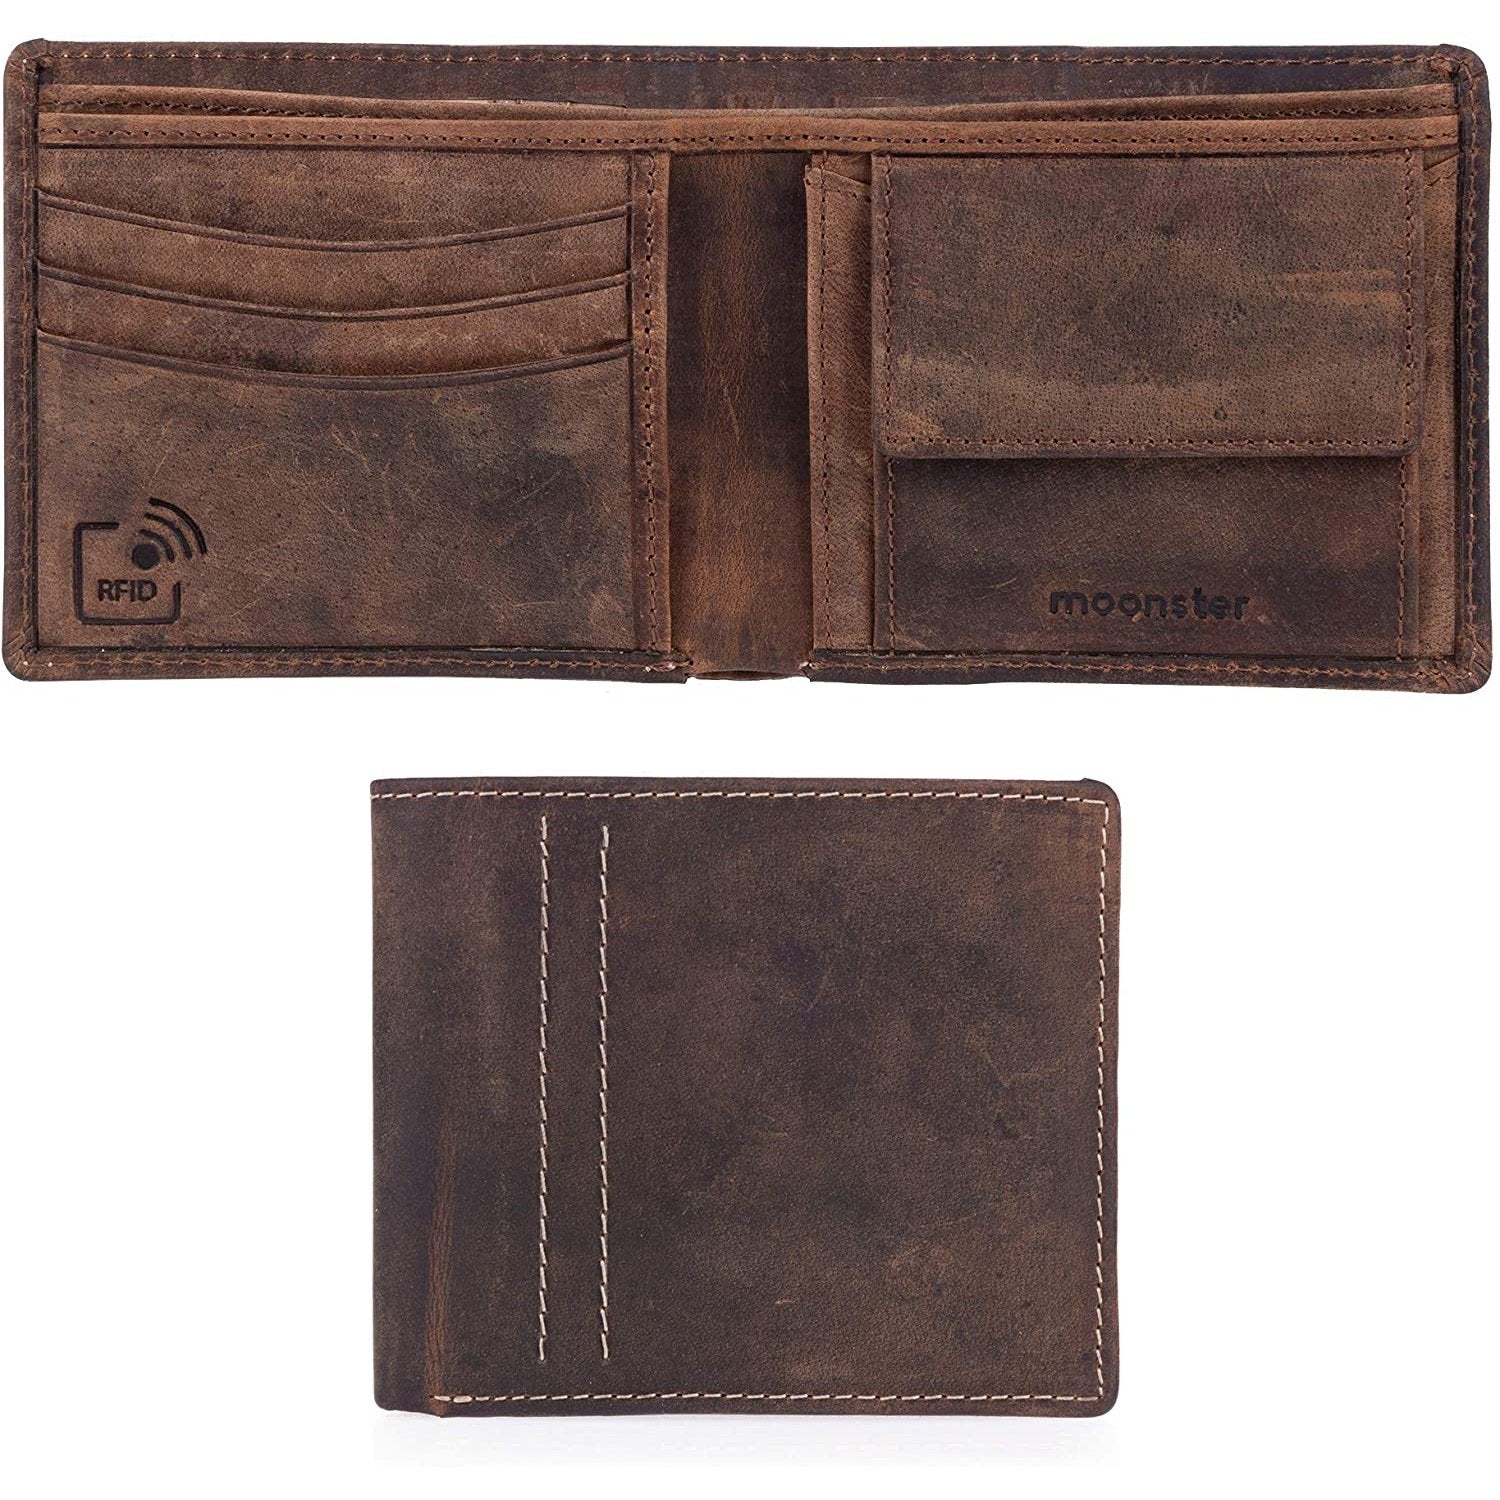 Mens RFID Blocking Slim Genuine Leather Wallet - With Gift Box